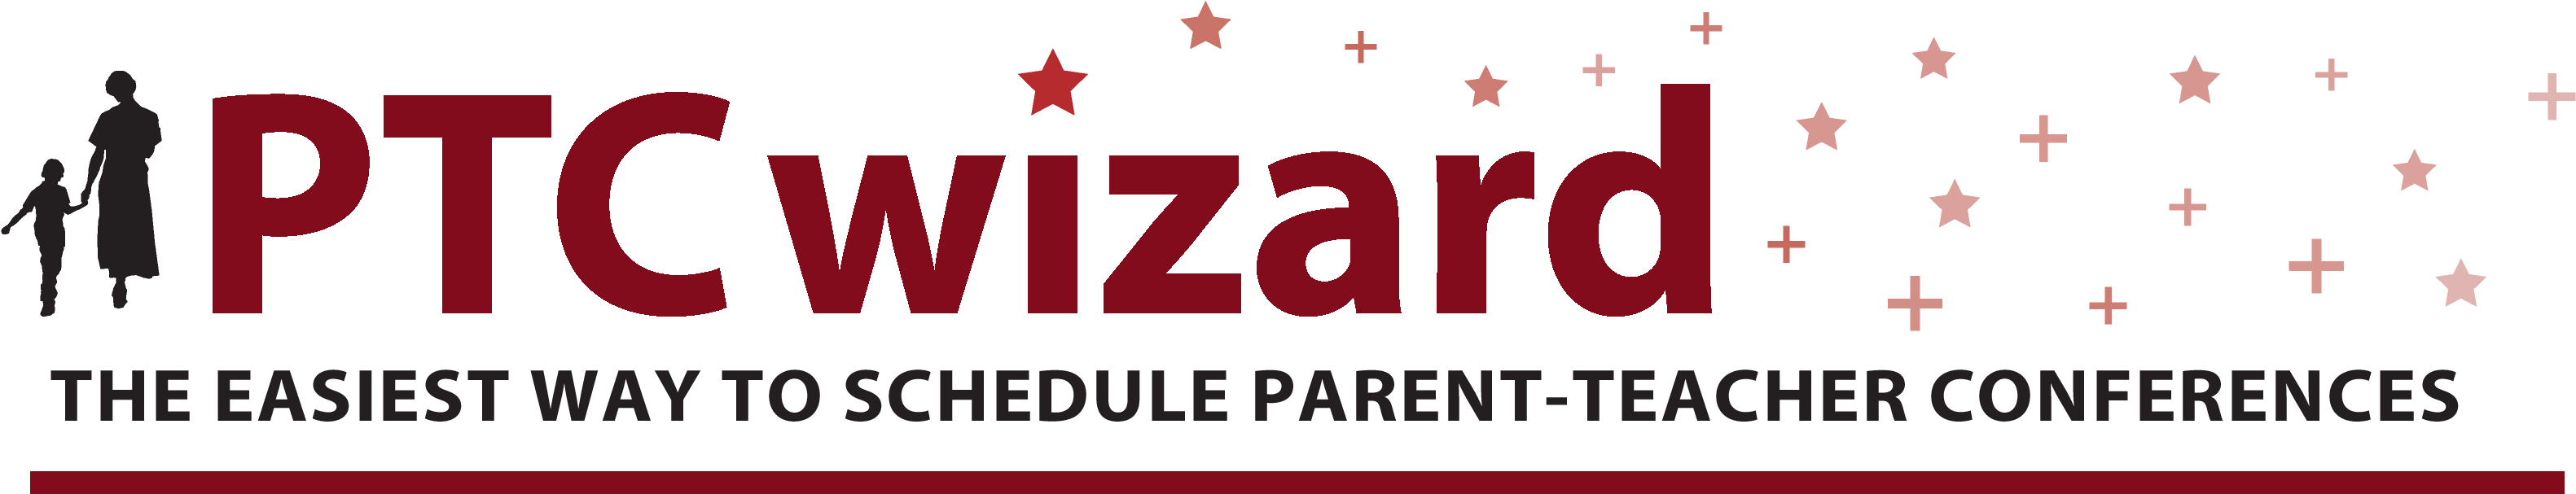 Ptc-logo - Parent-teacher Conference (3203x650)